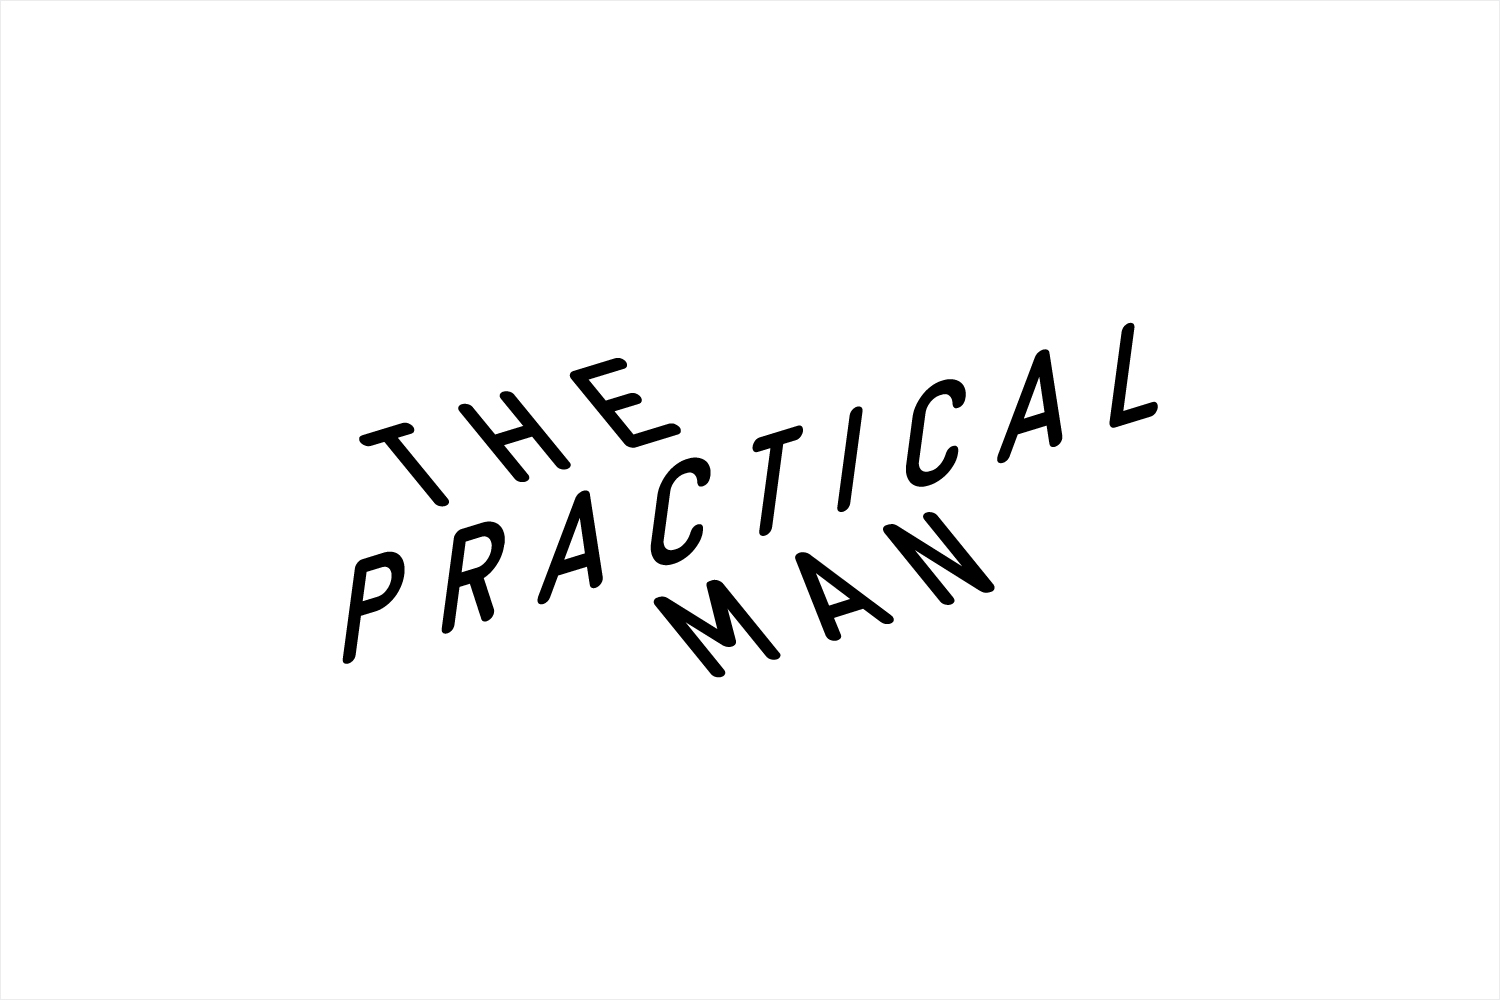 Creative Logotype Gallery & Inspiration: The Practical Man by Garbett, Australia